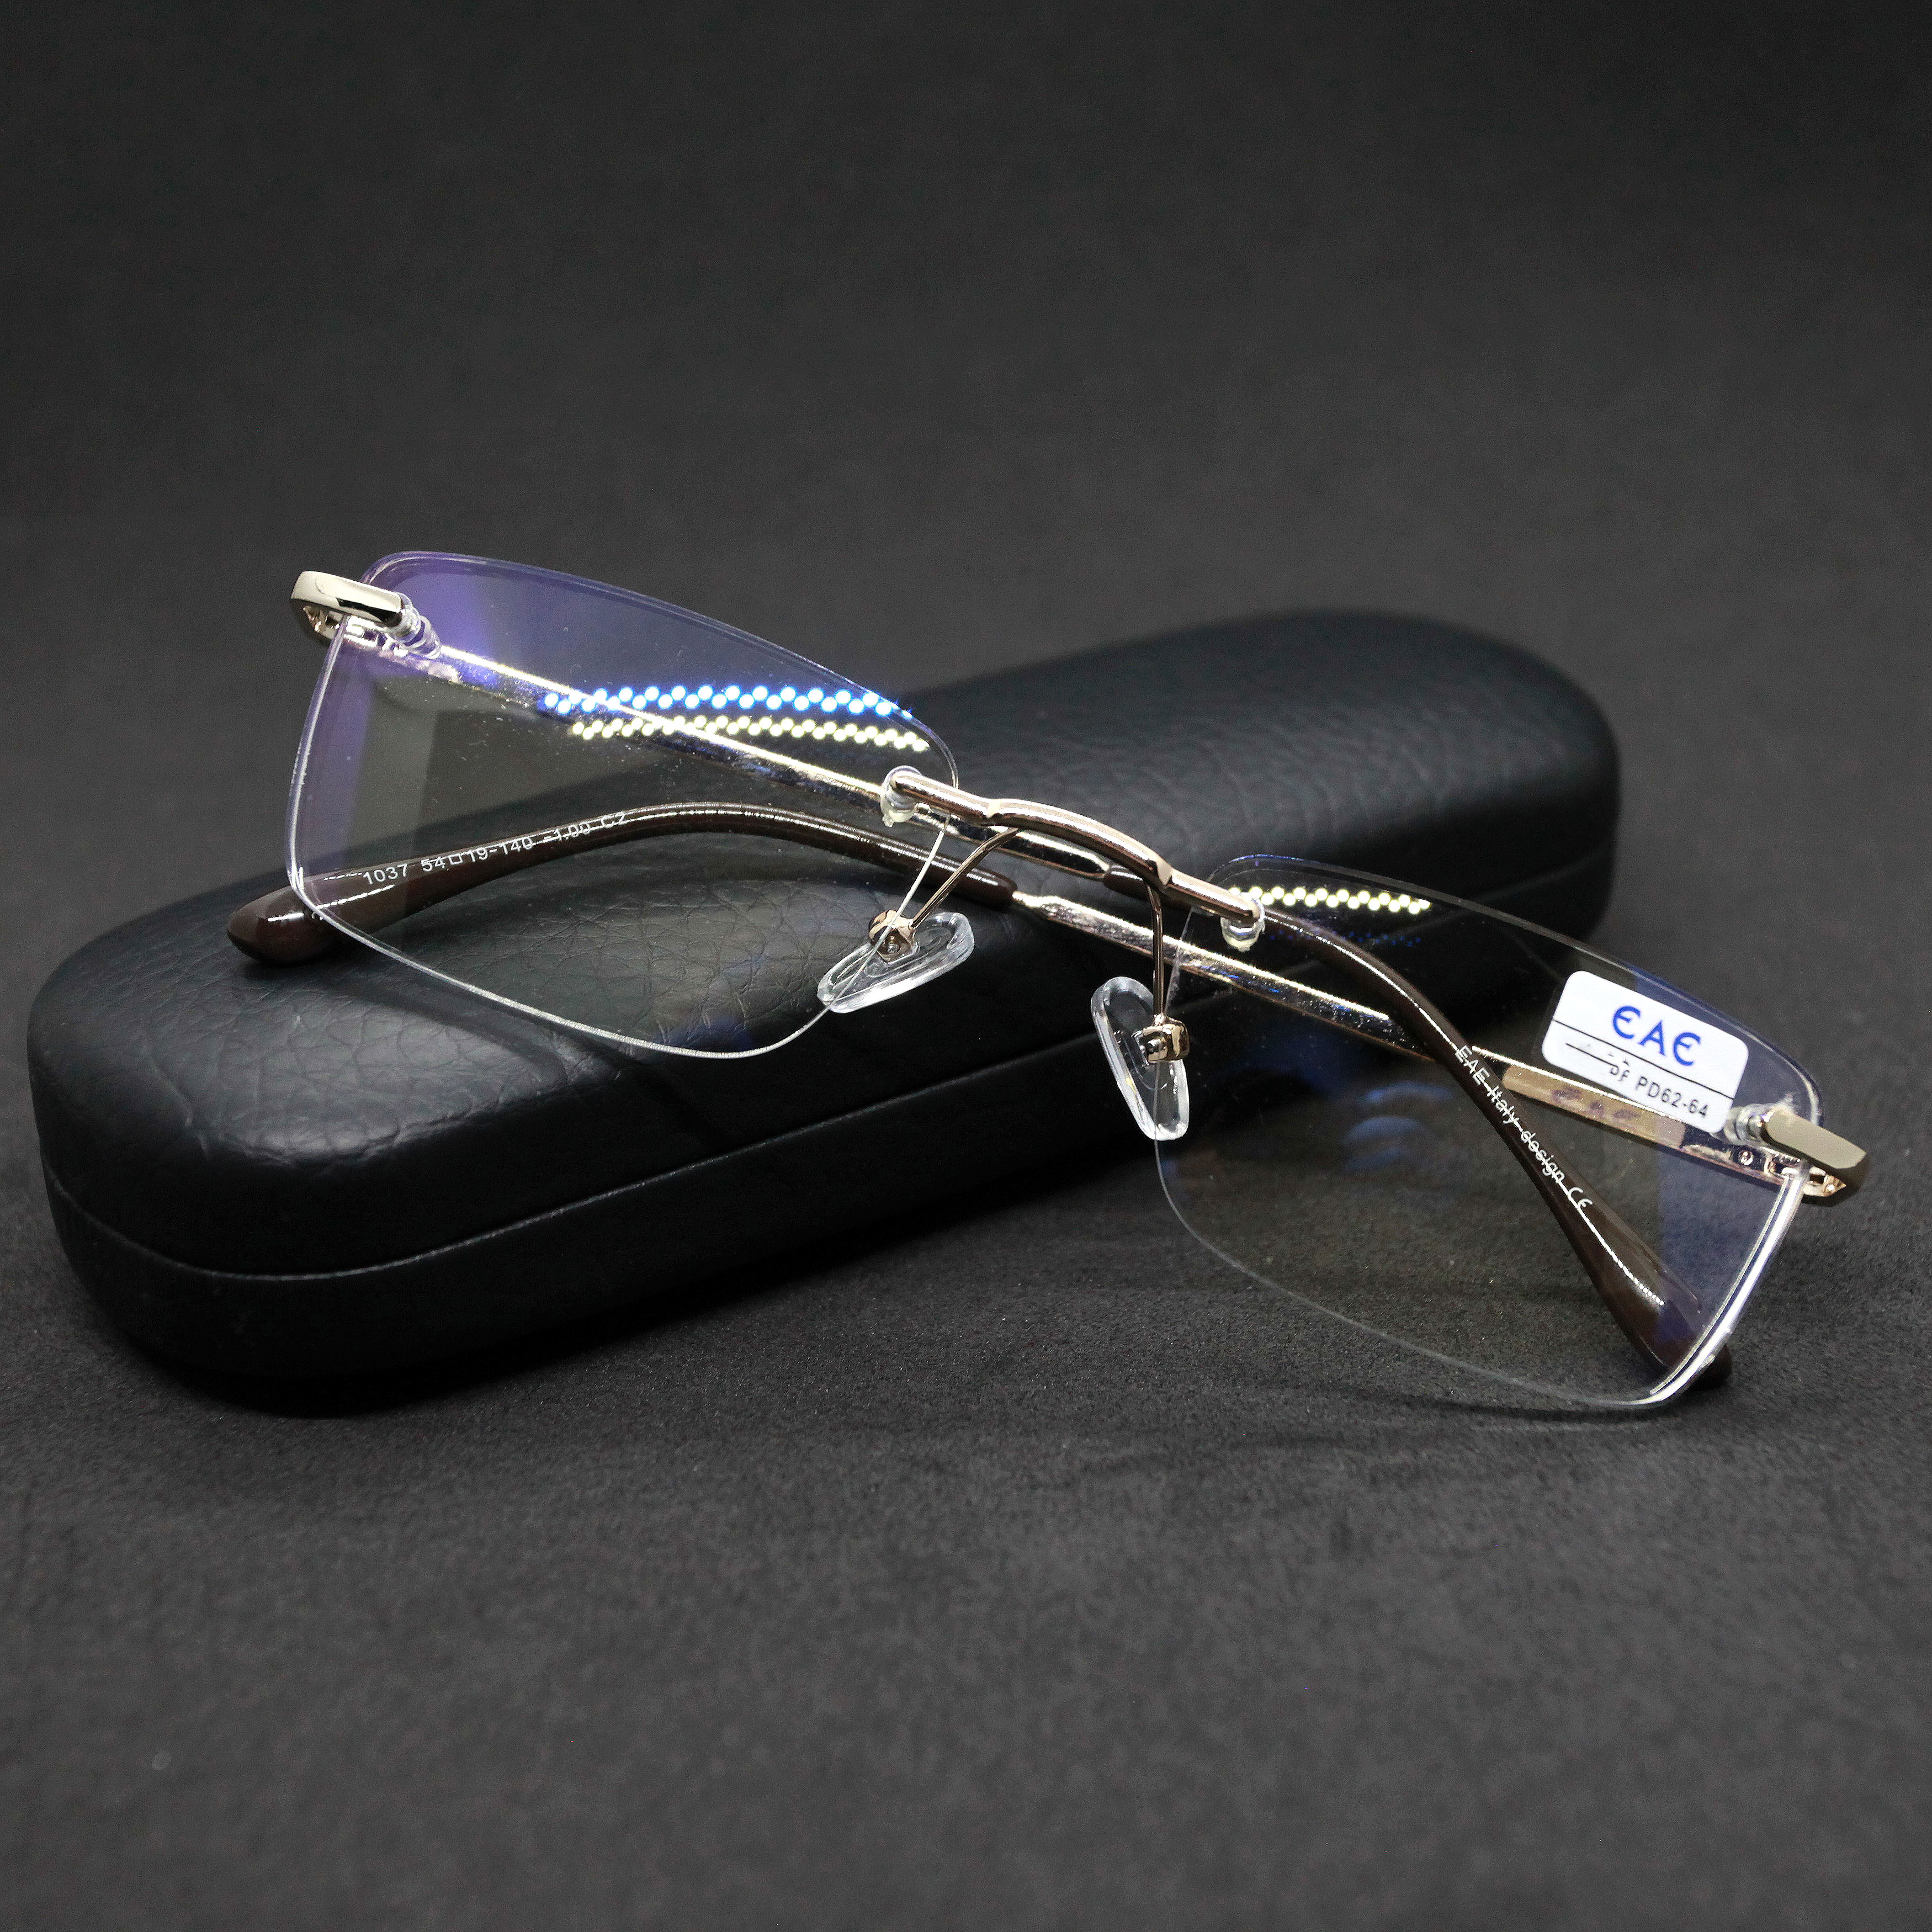 Безободковые очки EAE 1037 -2.00, c футляром, антиблик, цвет серый, РЦ 62-64